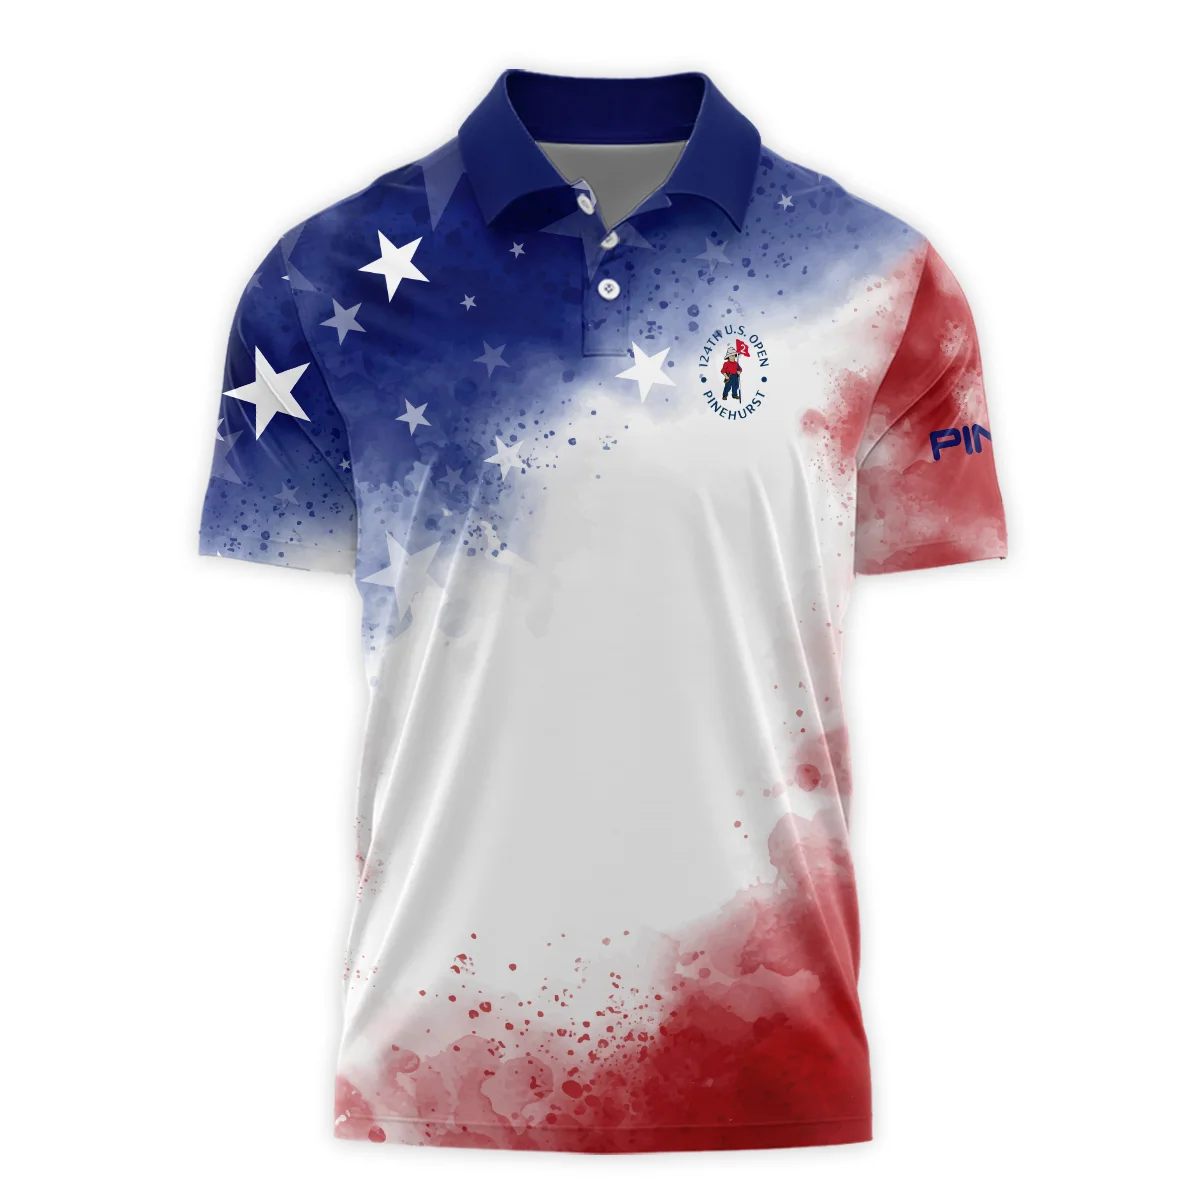 124th U.S. Open Pinehurst Ping Blue Red Watercolor Star White Backgound Hoodie Shirt Style Classic Hoodie Shirt